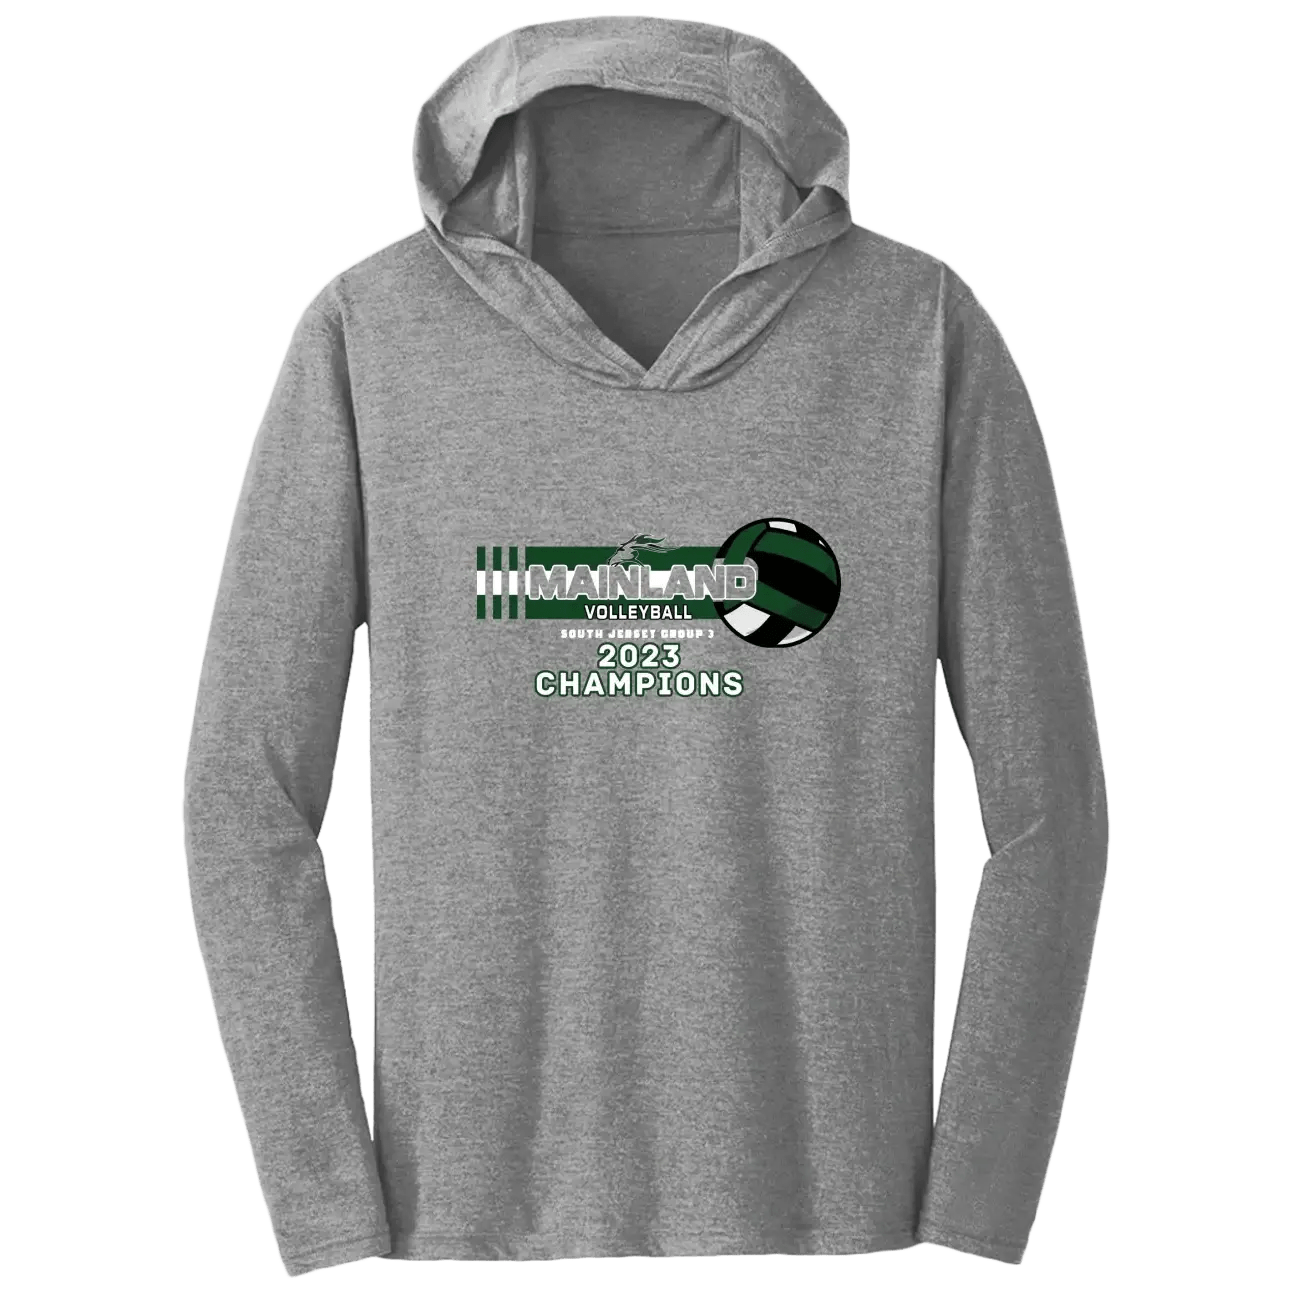 Mainland Volleyball Hoodies - Shore Break Designs - Customizer